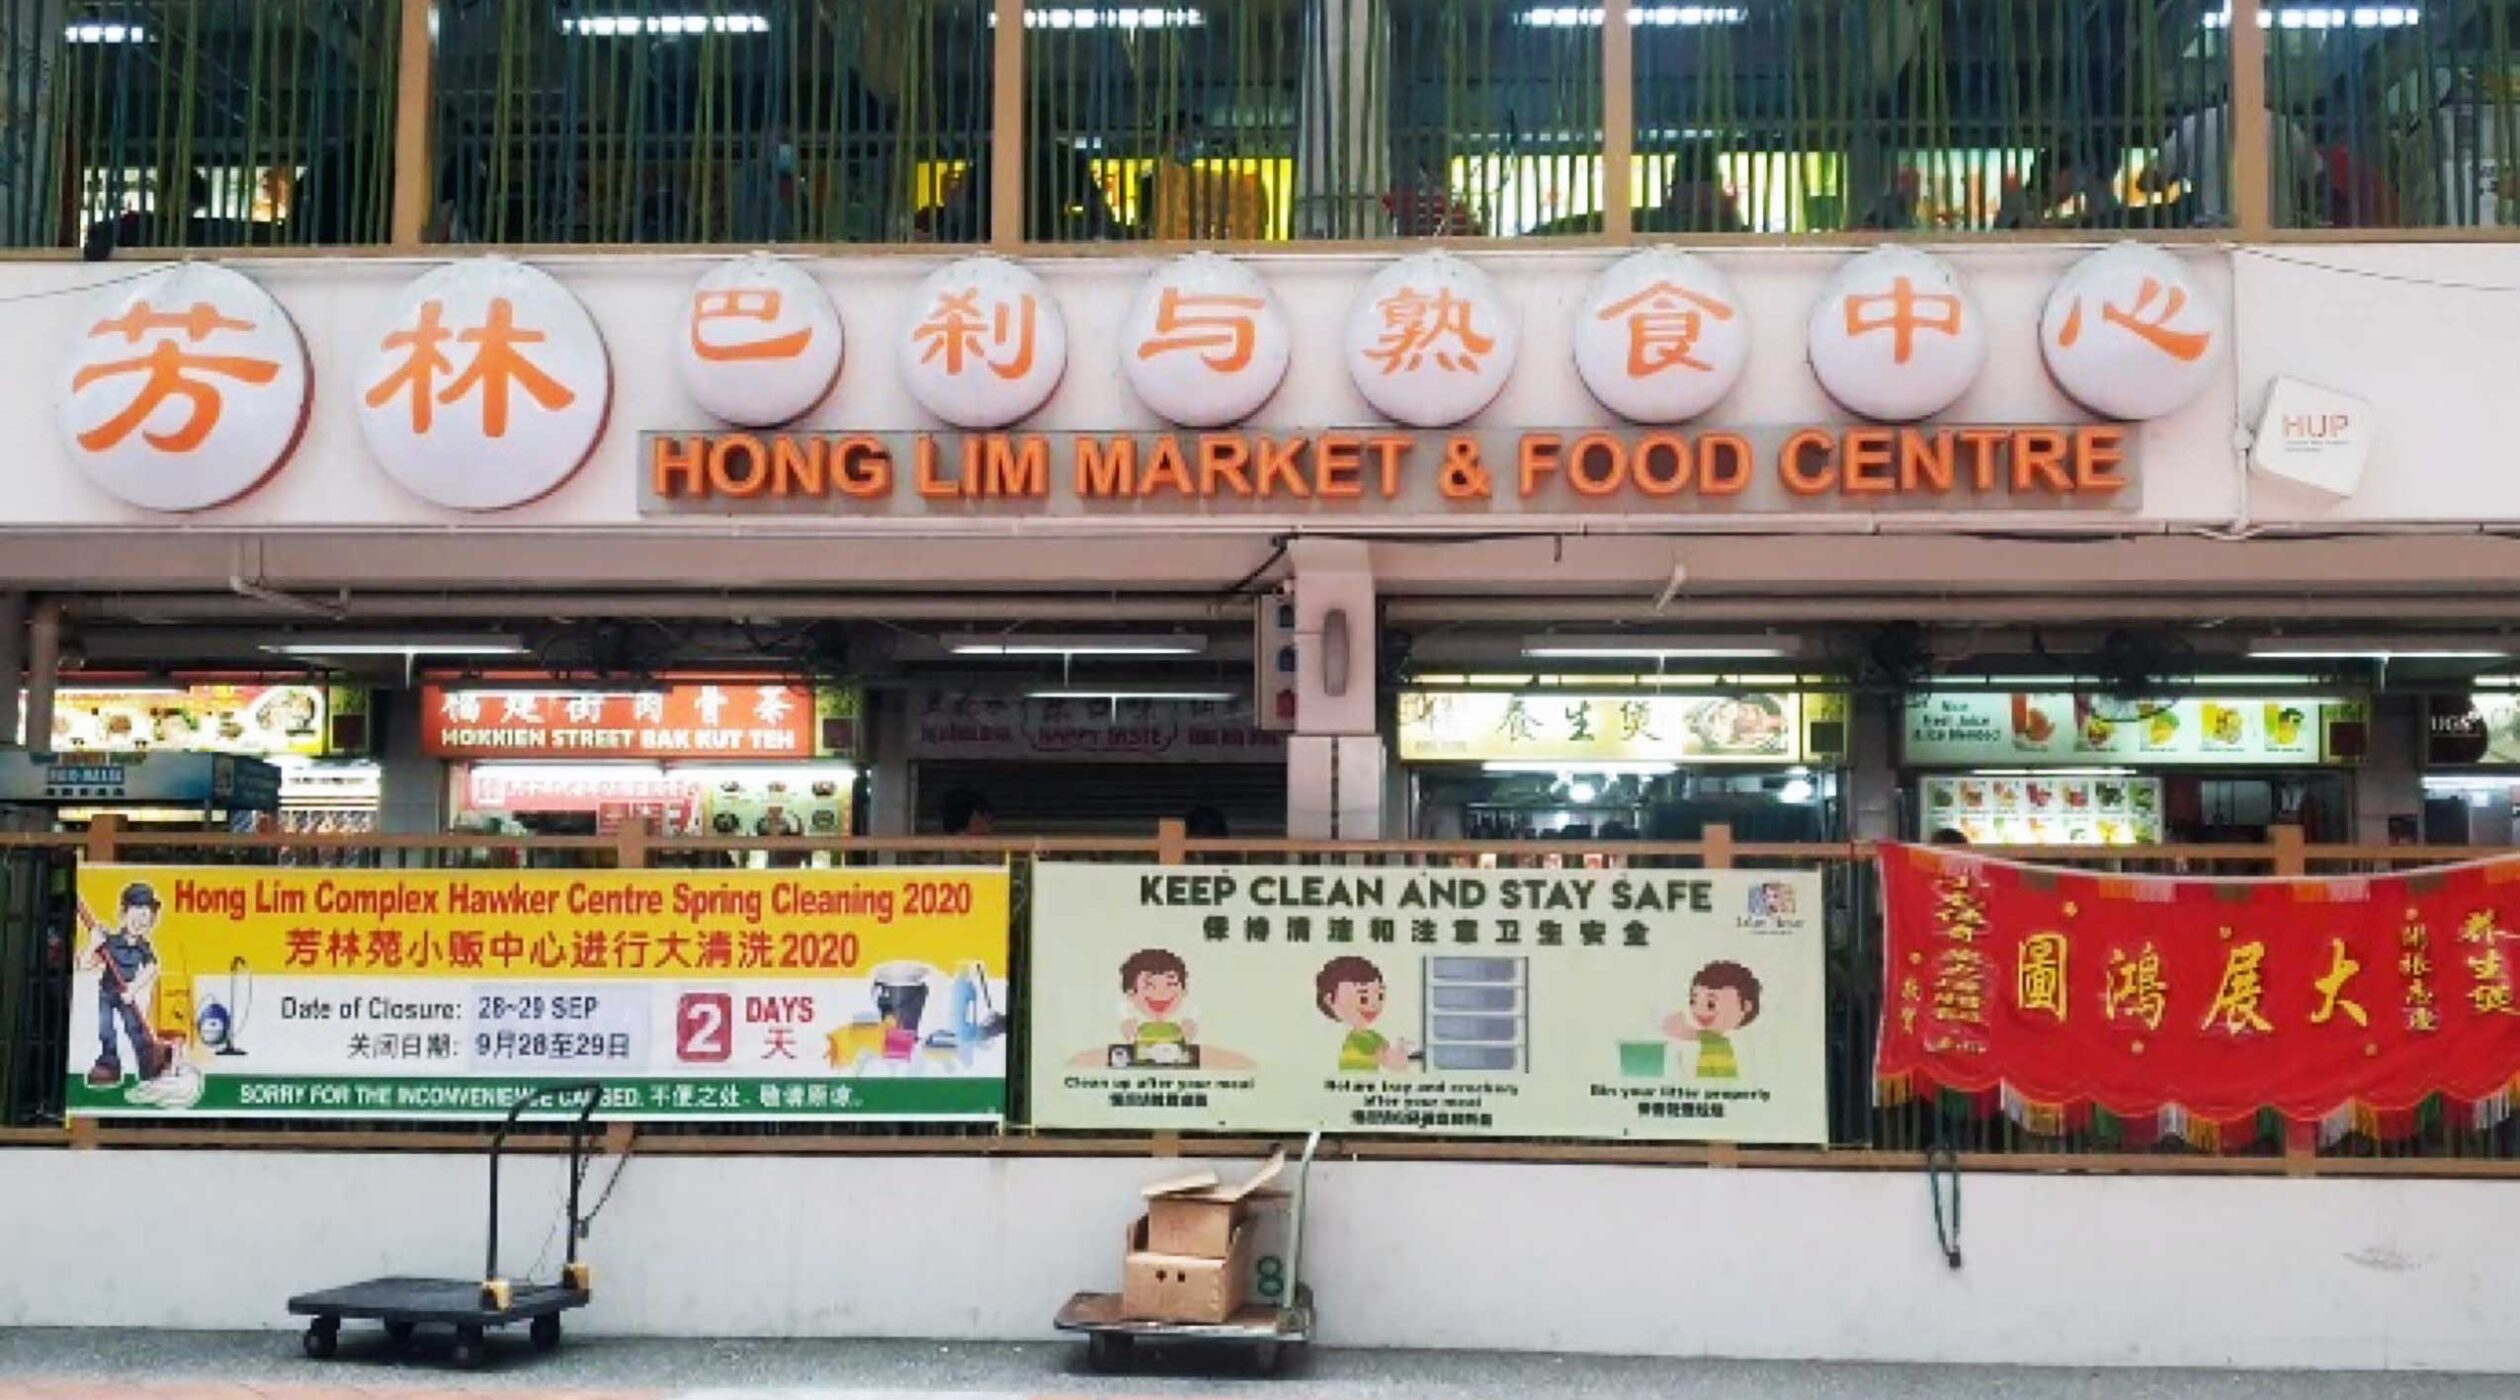 Hong Lim Market